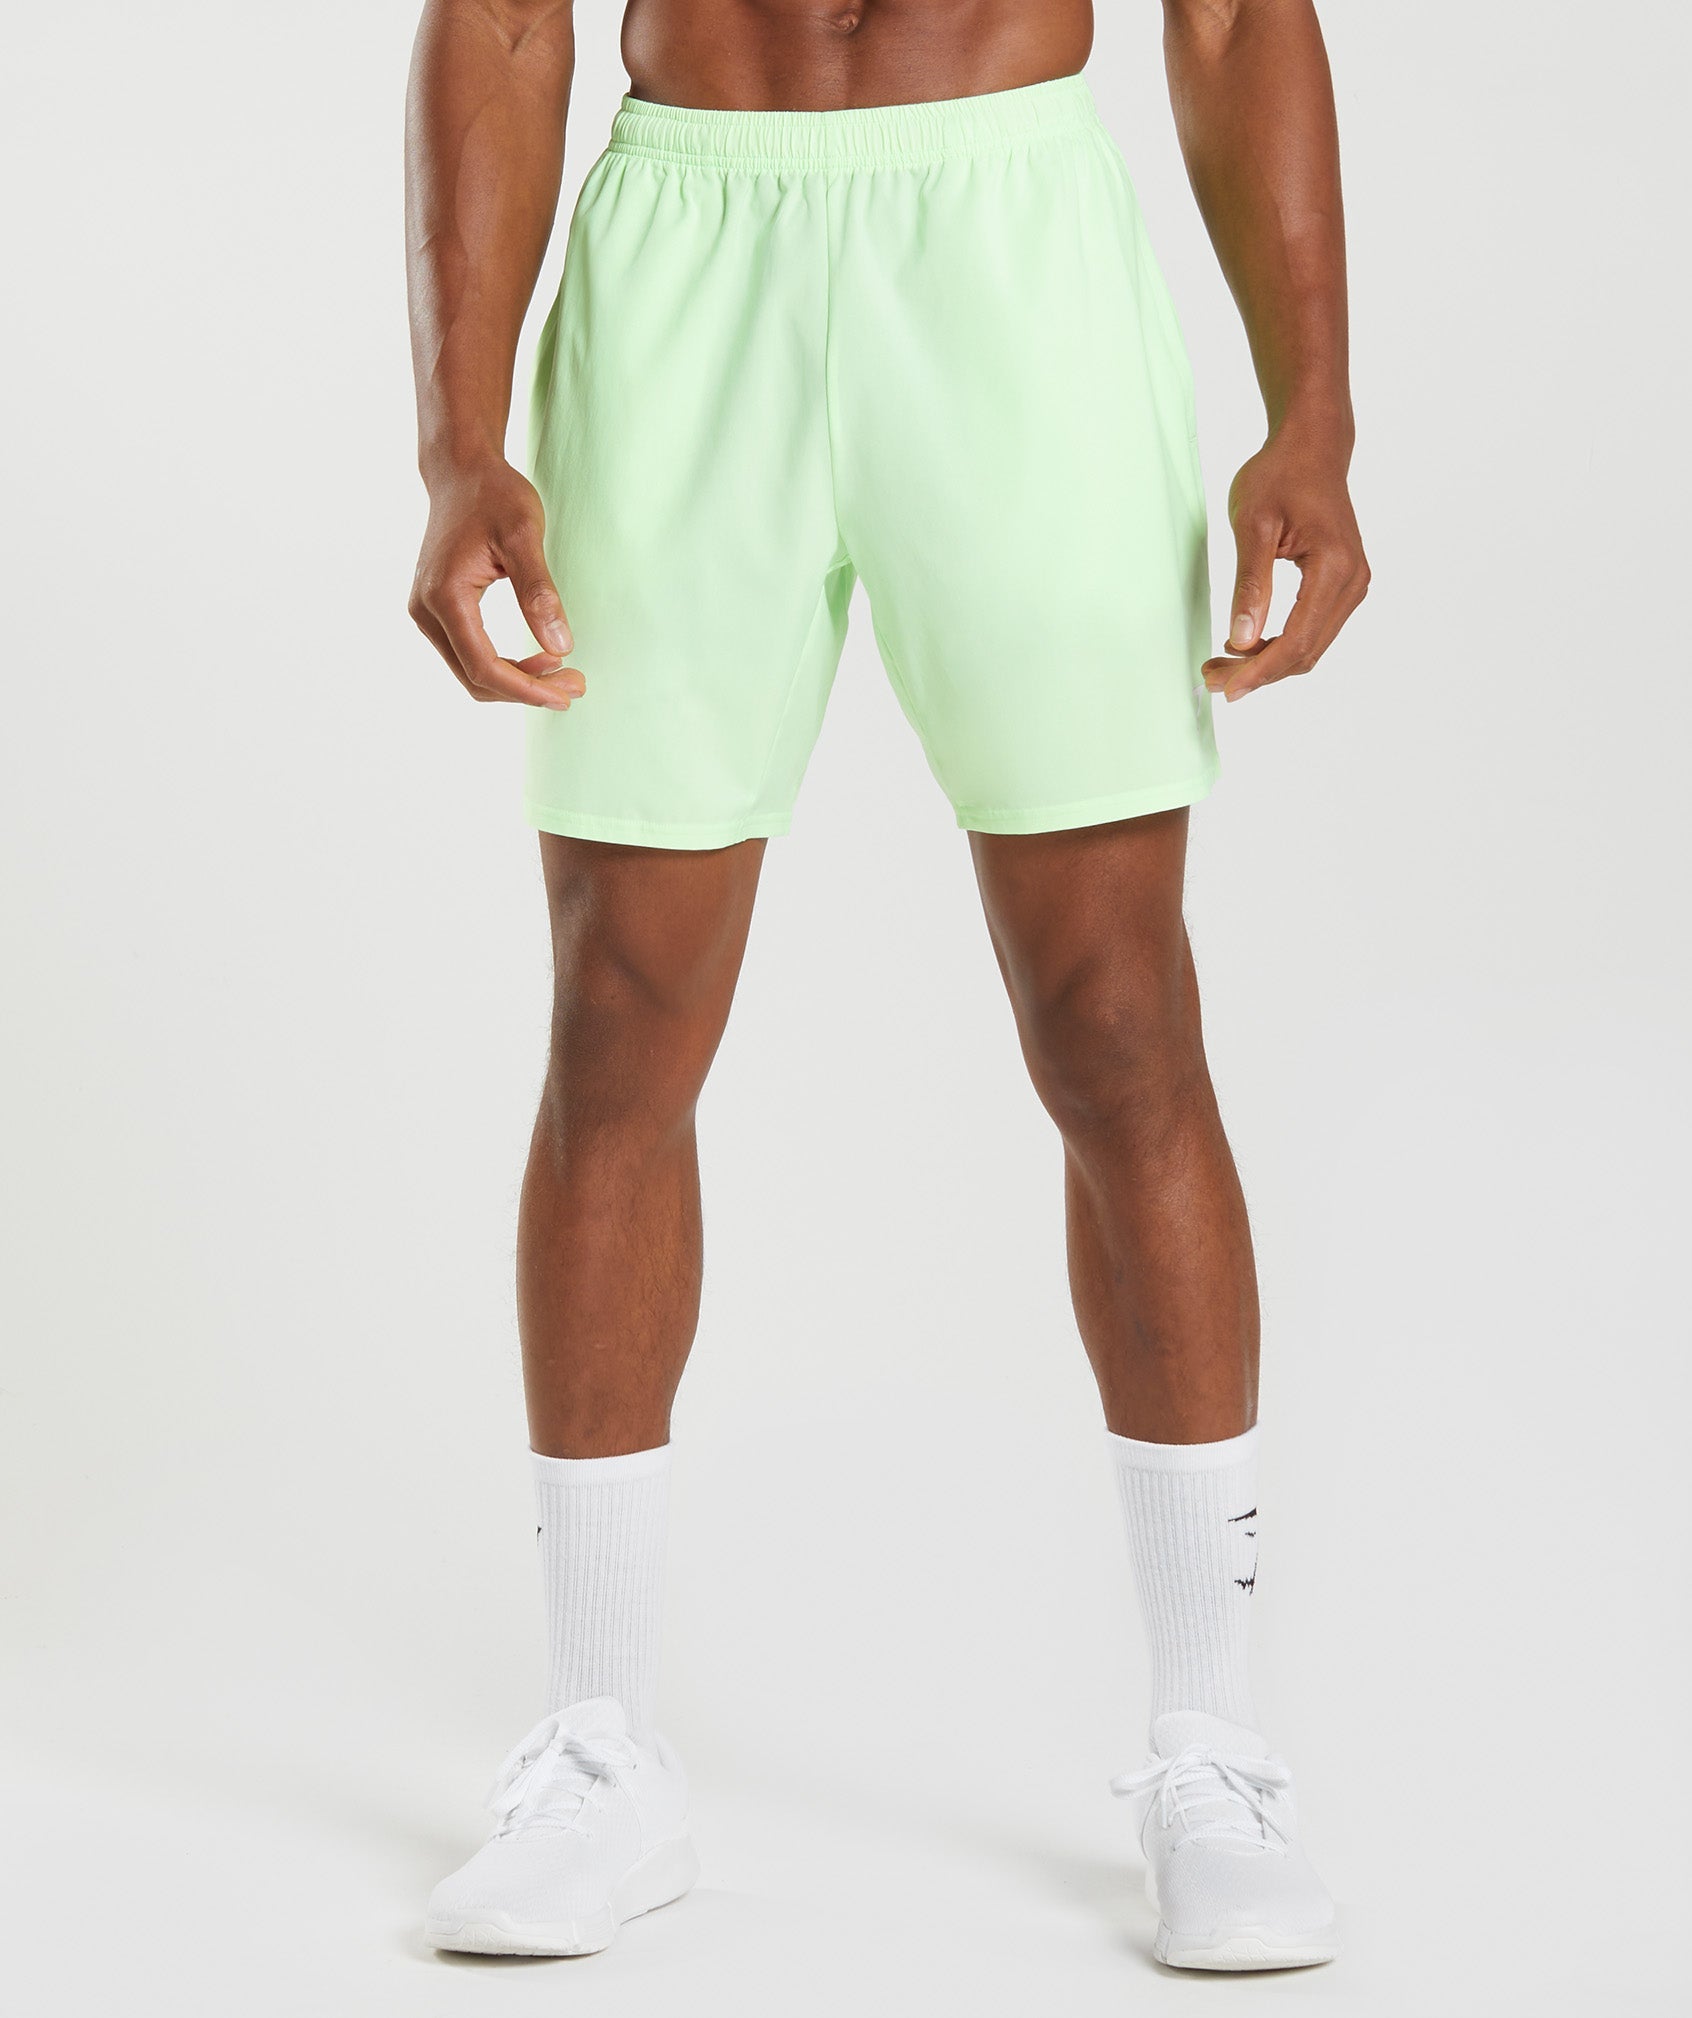 fvwitlyh Gymshark Shorts Men's Slim-fit 7 Inseam Stretch Short